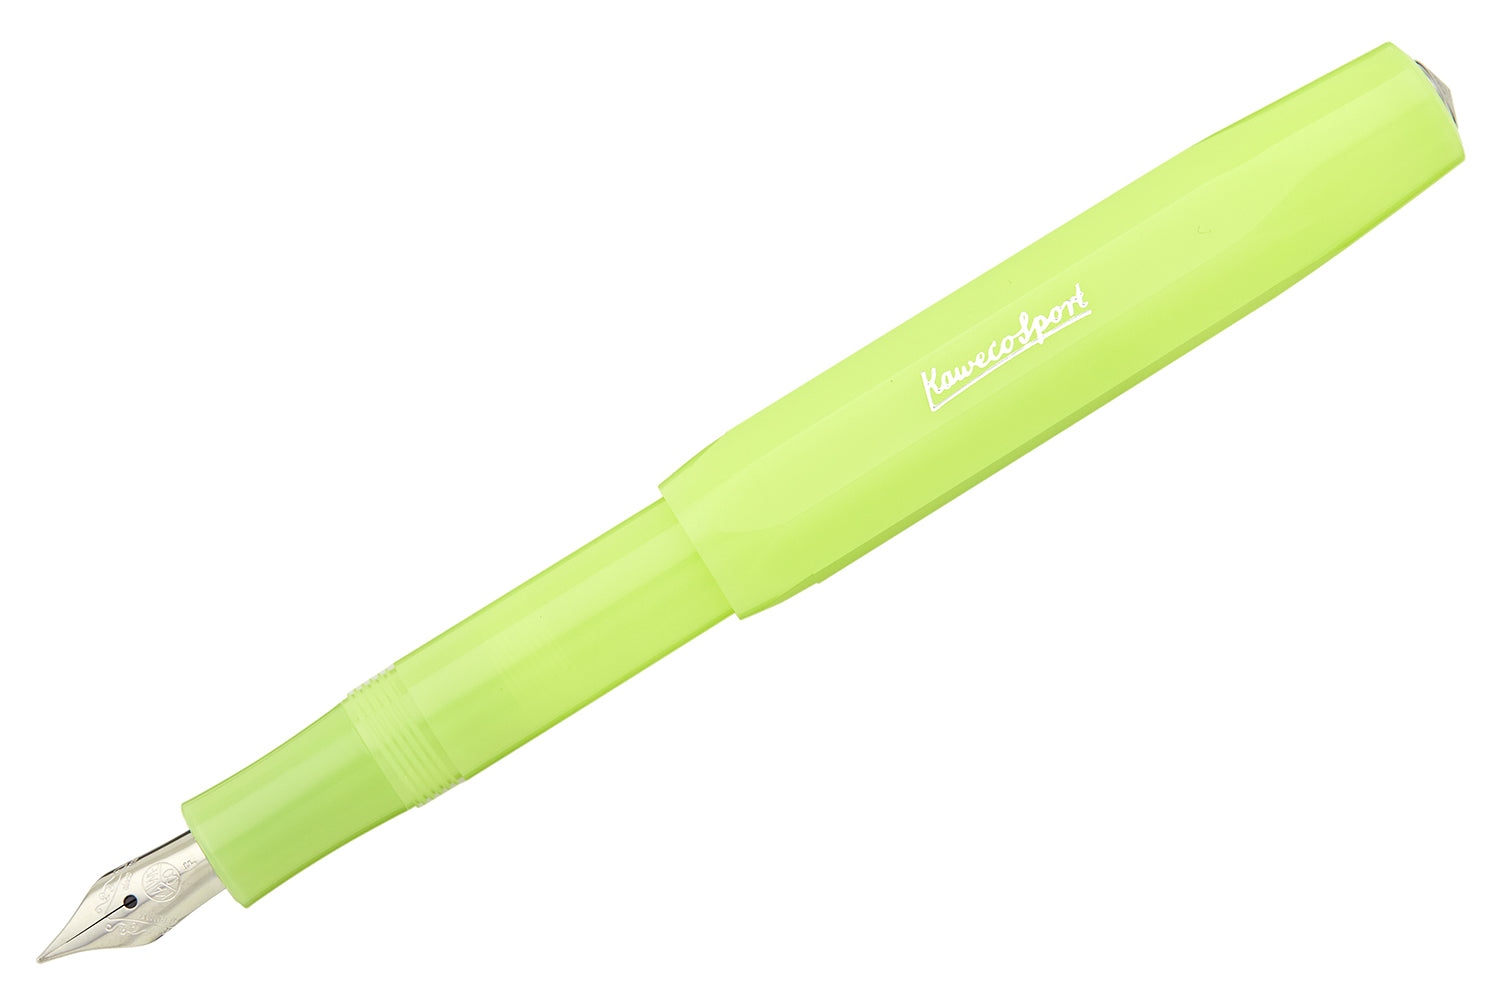 Kaweco Sport Fountain Pen - Green